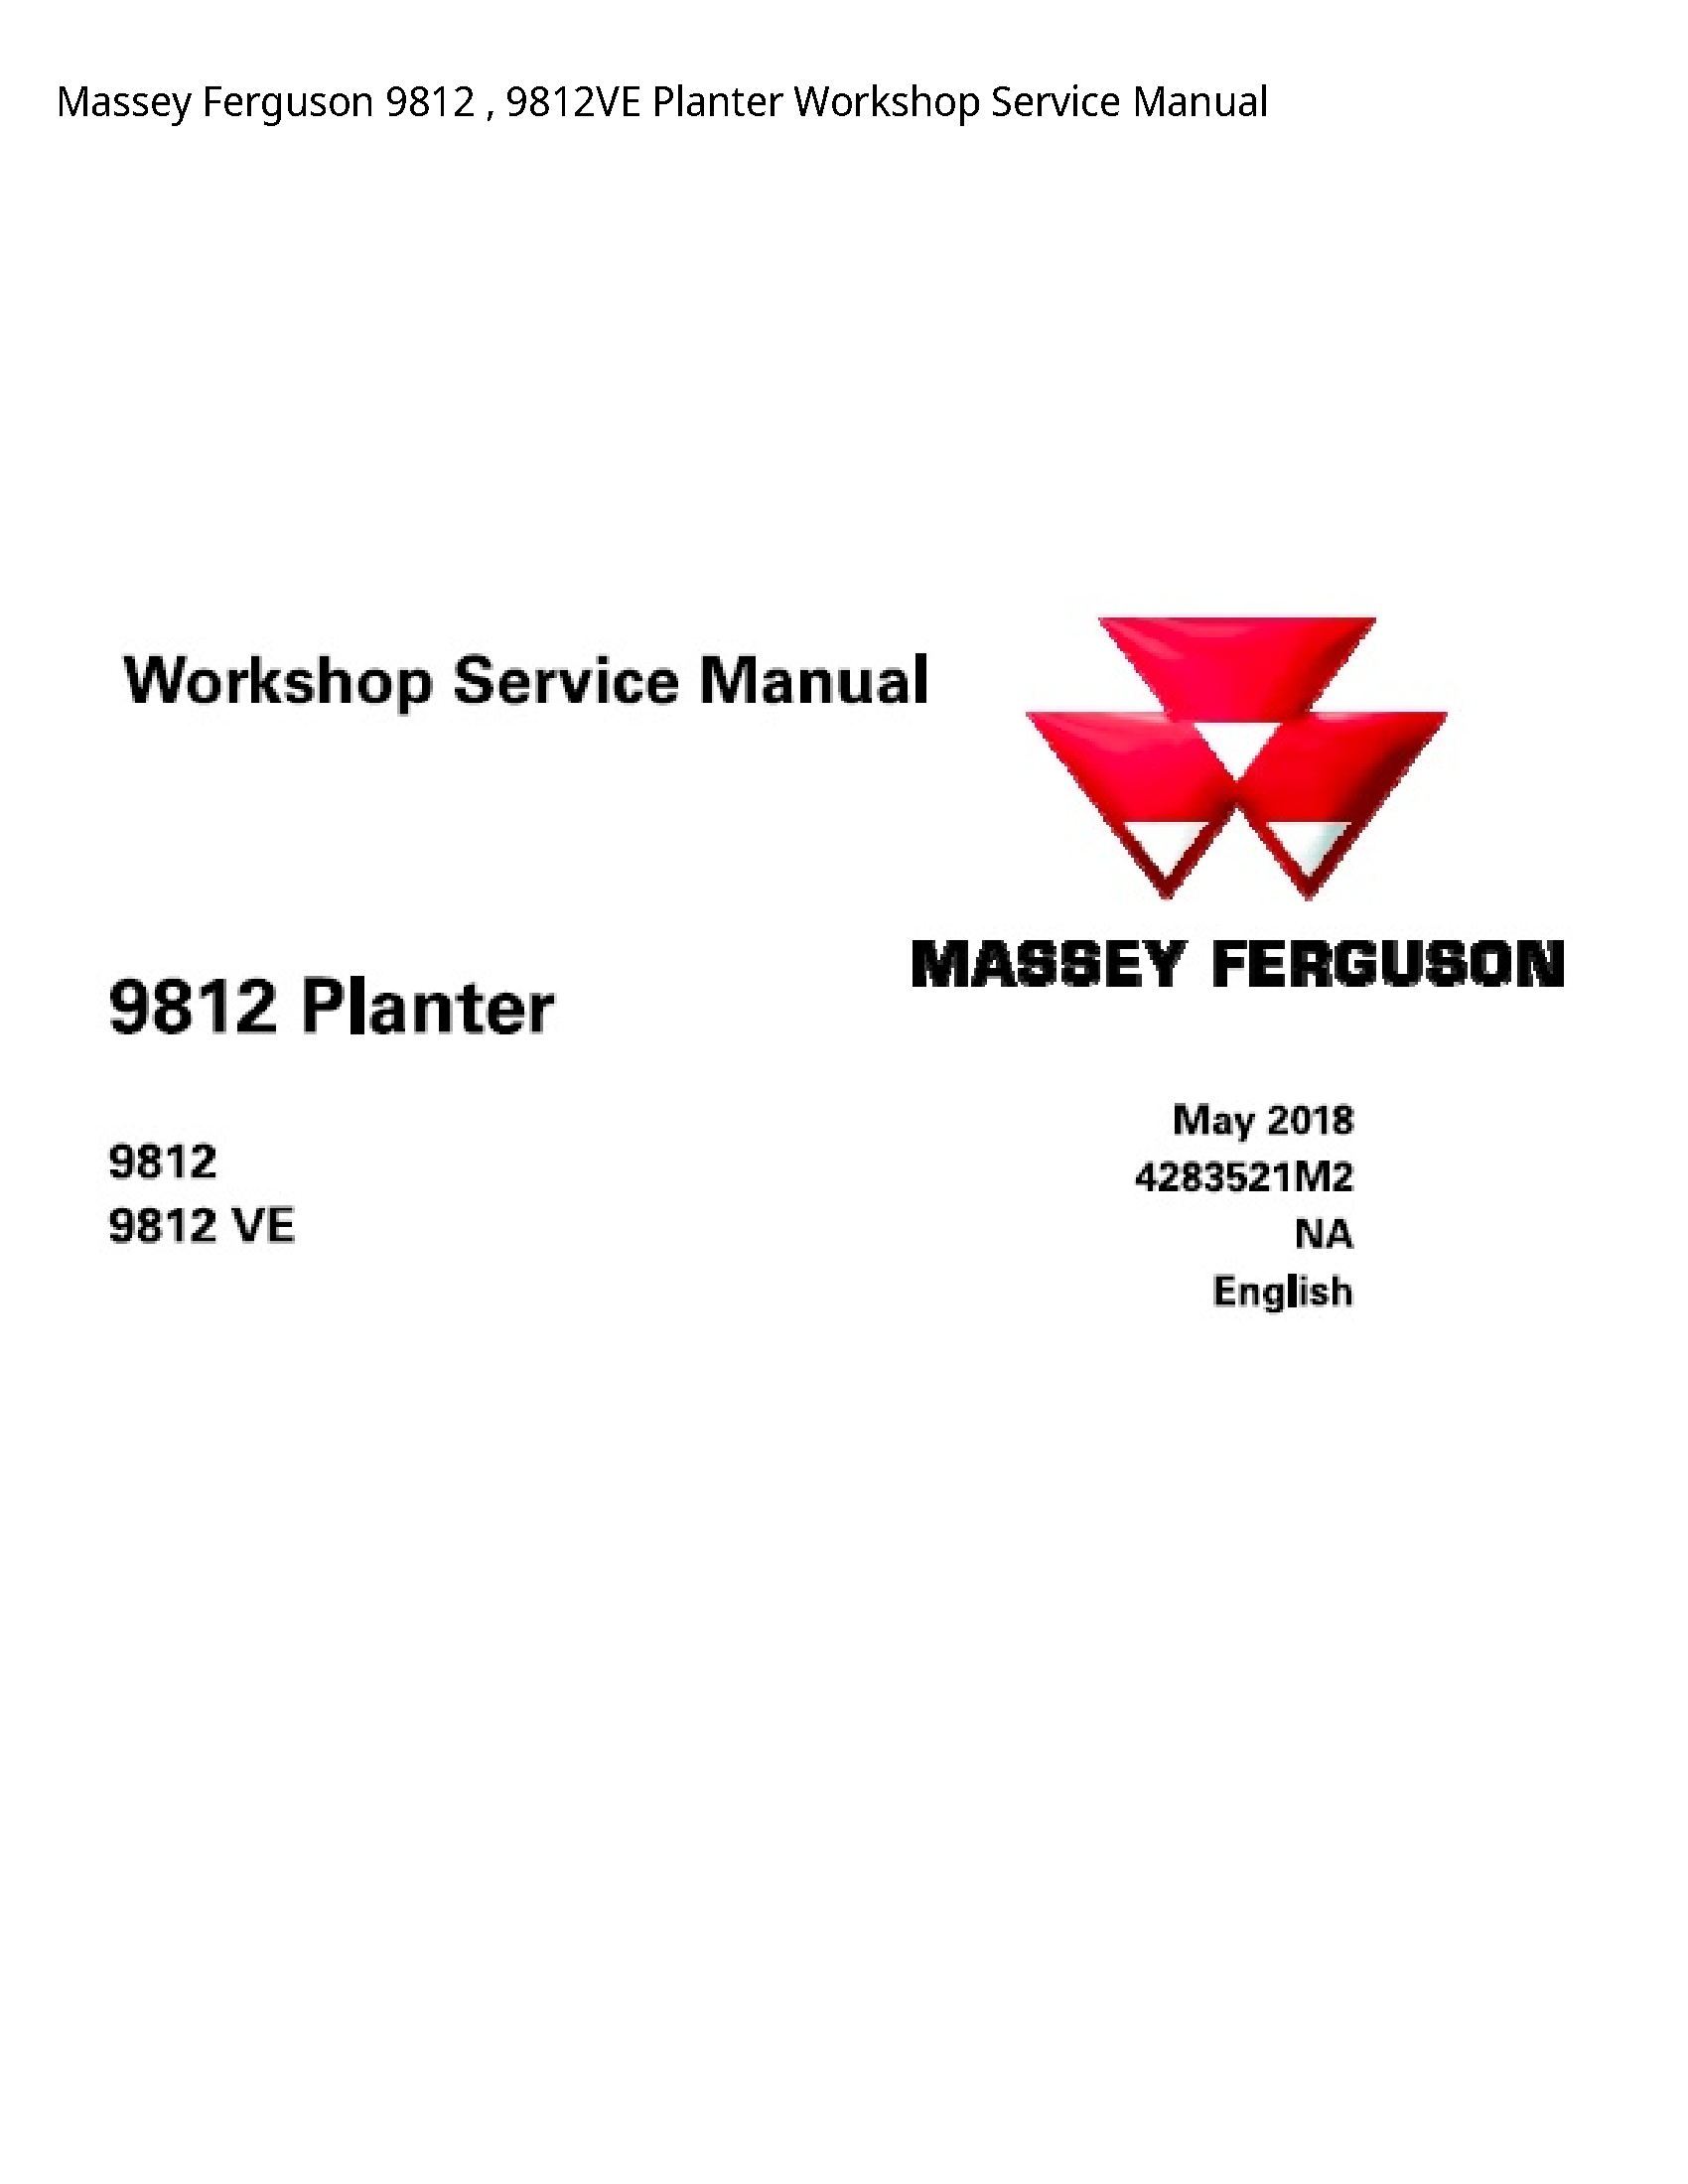 Massey Ferguson 9812 Planter Service manual